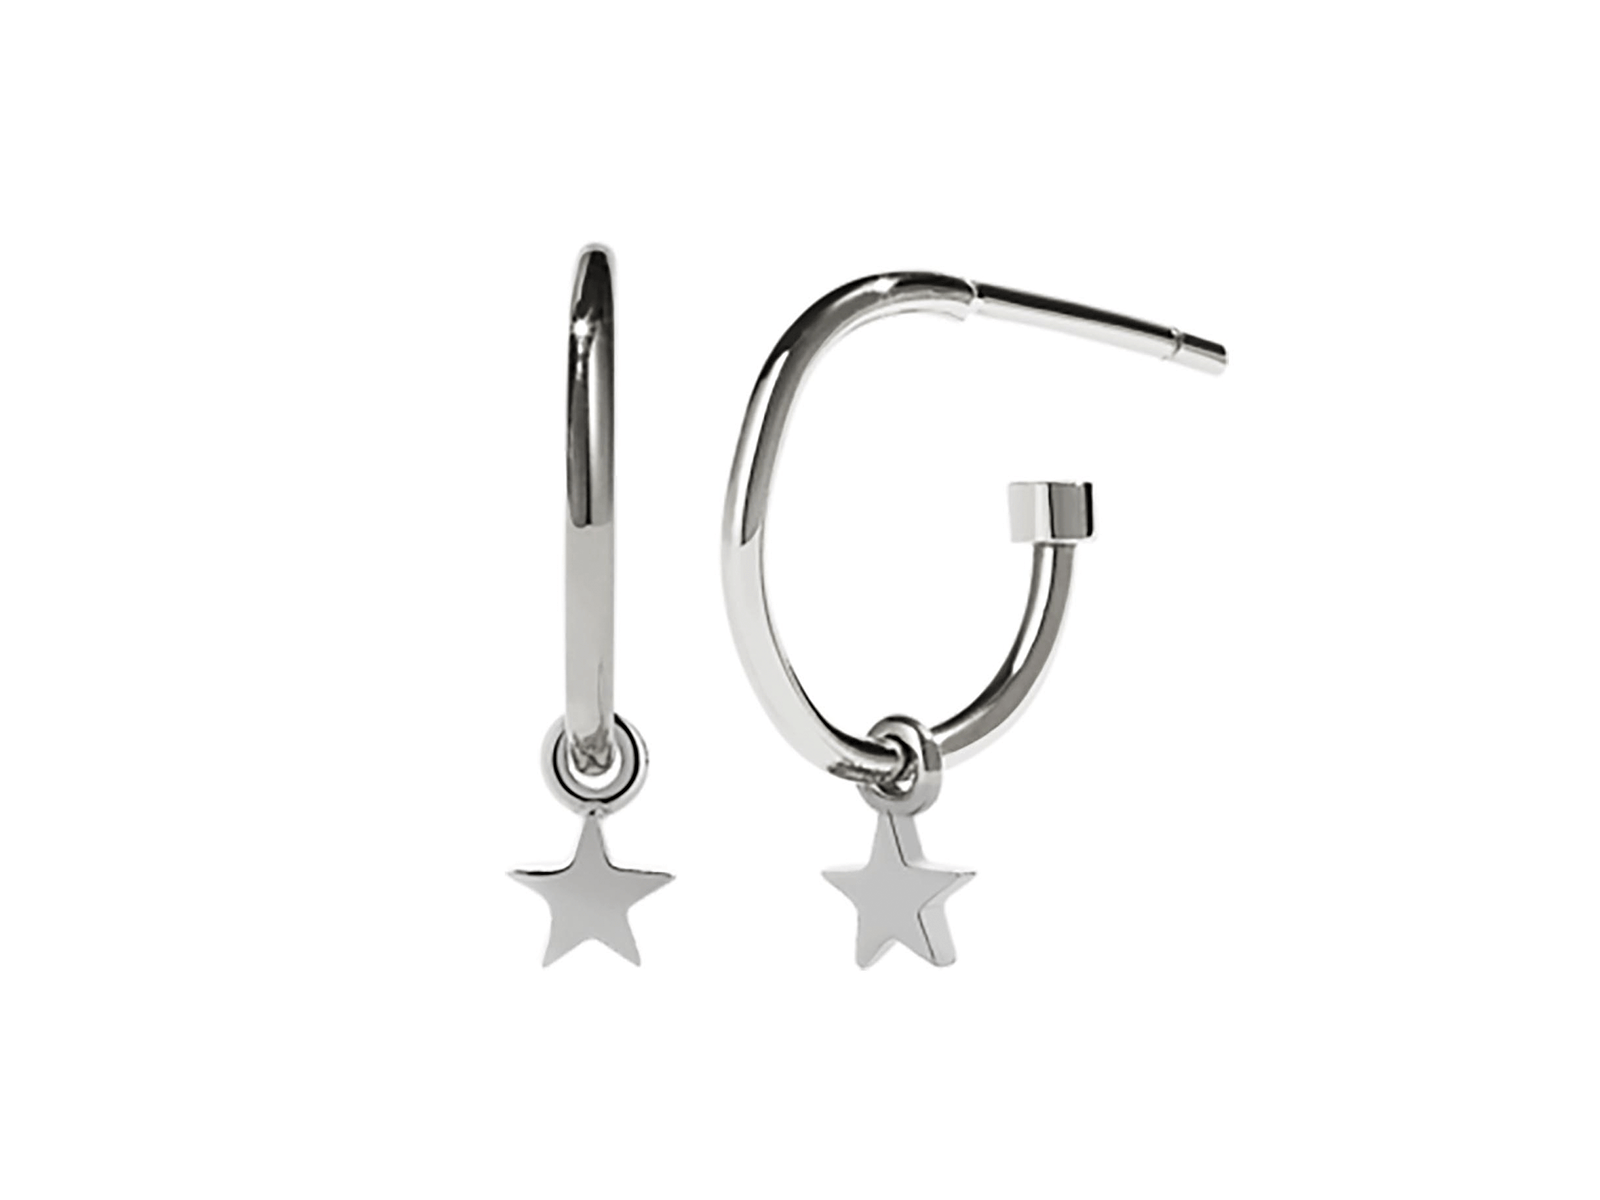 Silver hoop earrings with a hanging star pendant by Meadowlark